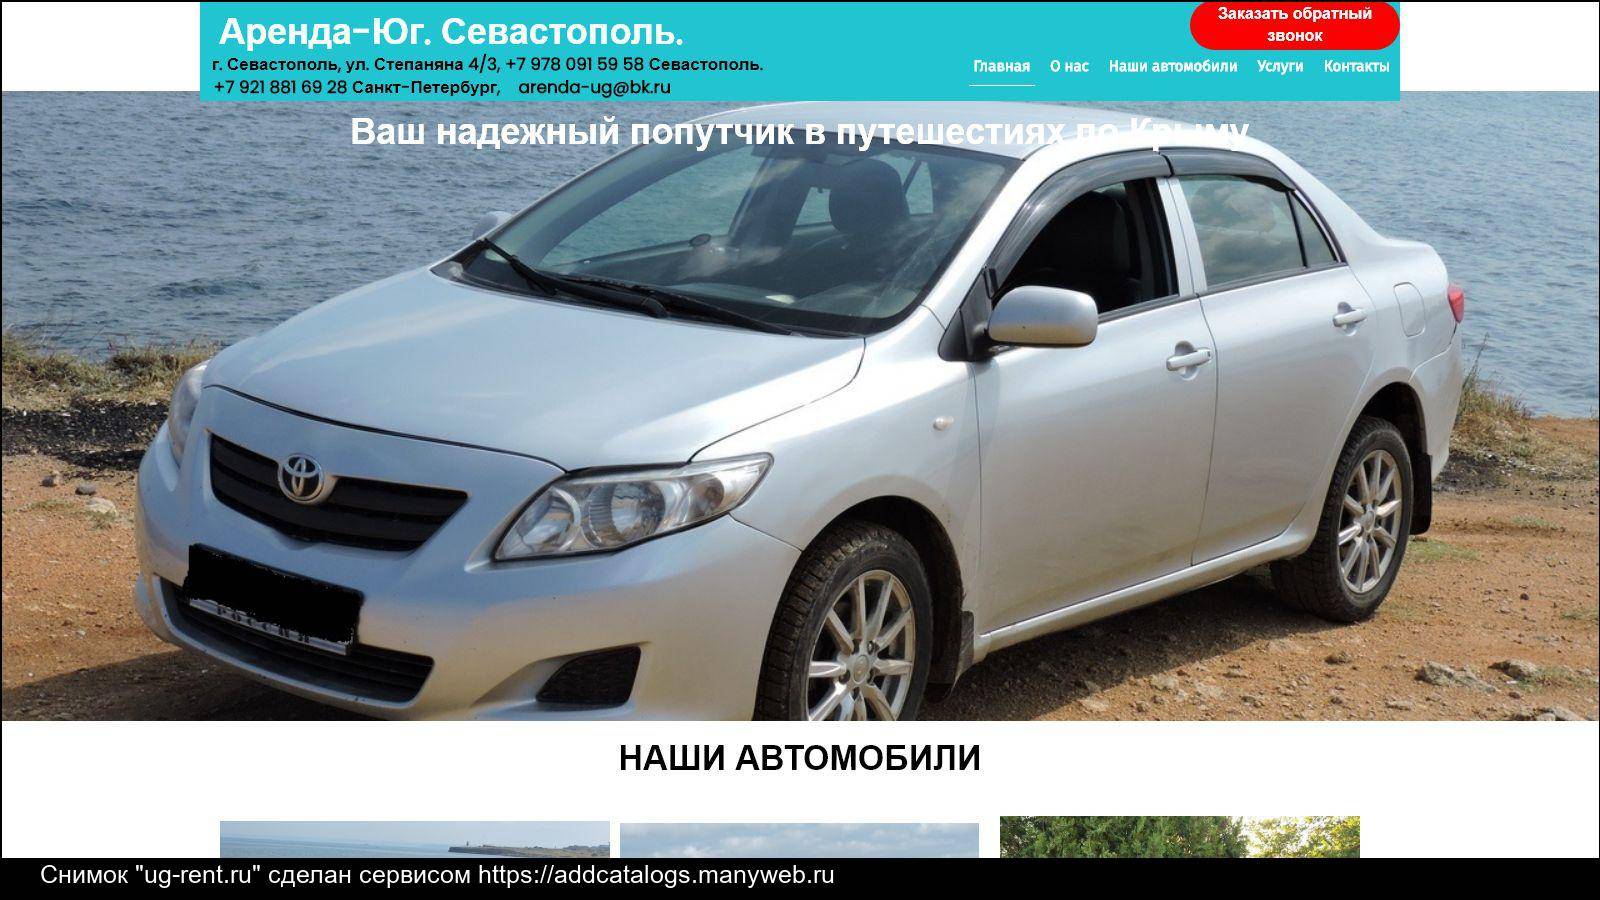 Фототелеграф  » аренда авто в болгарии: советы и рекомендации